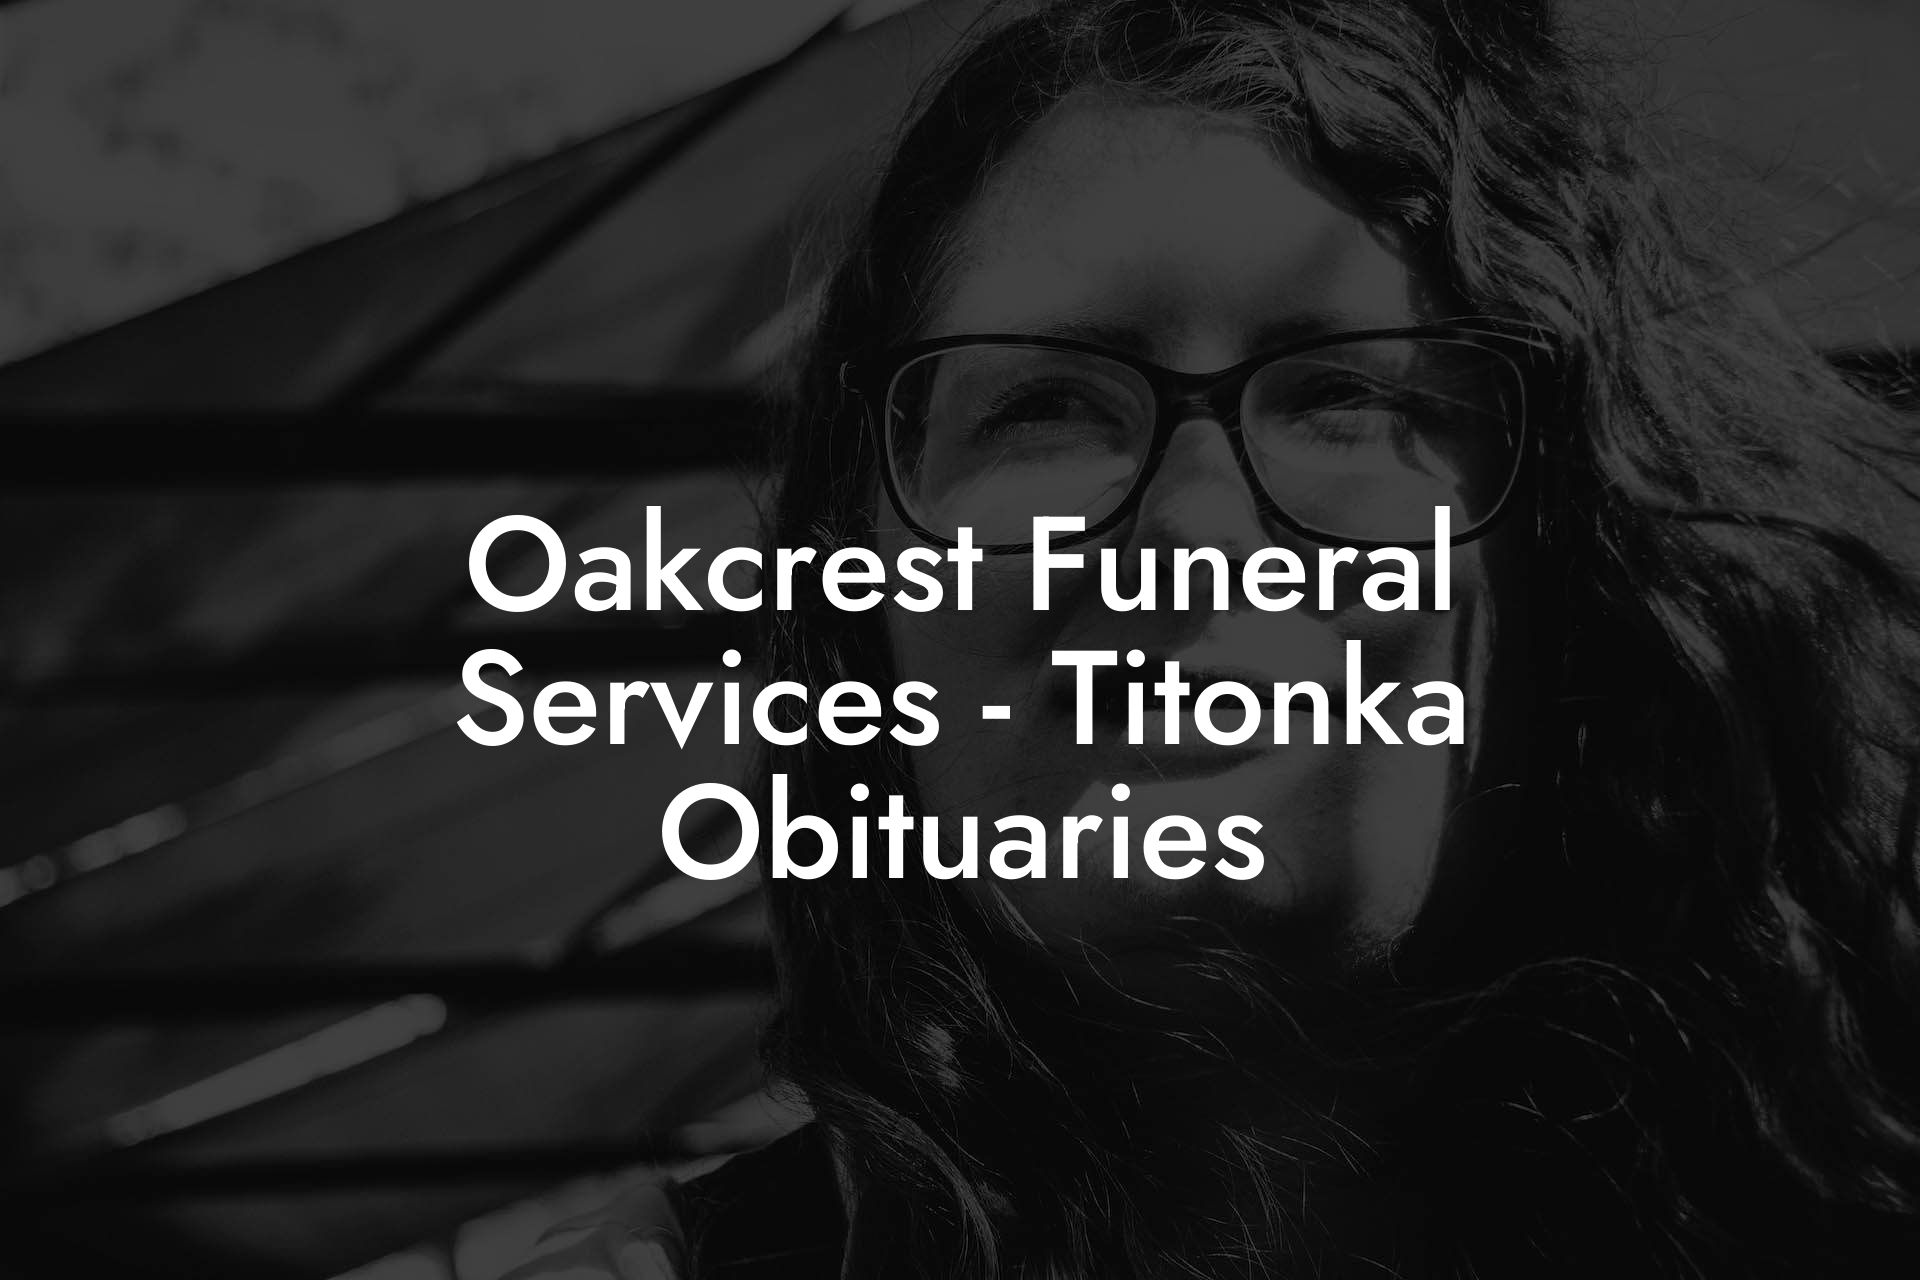 Oakcrest Funeral Services - Titonka Obituaries